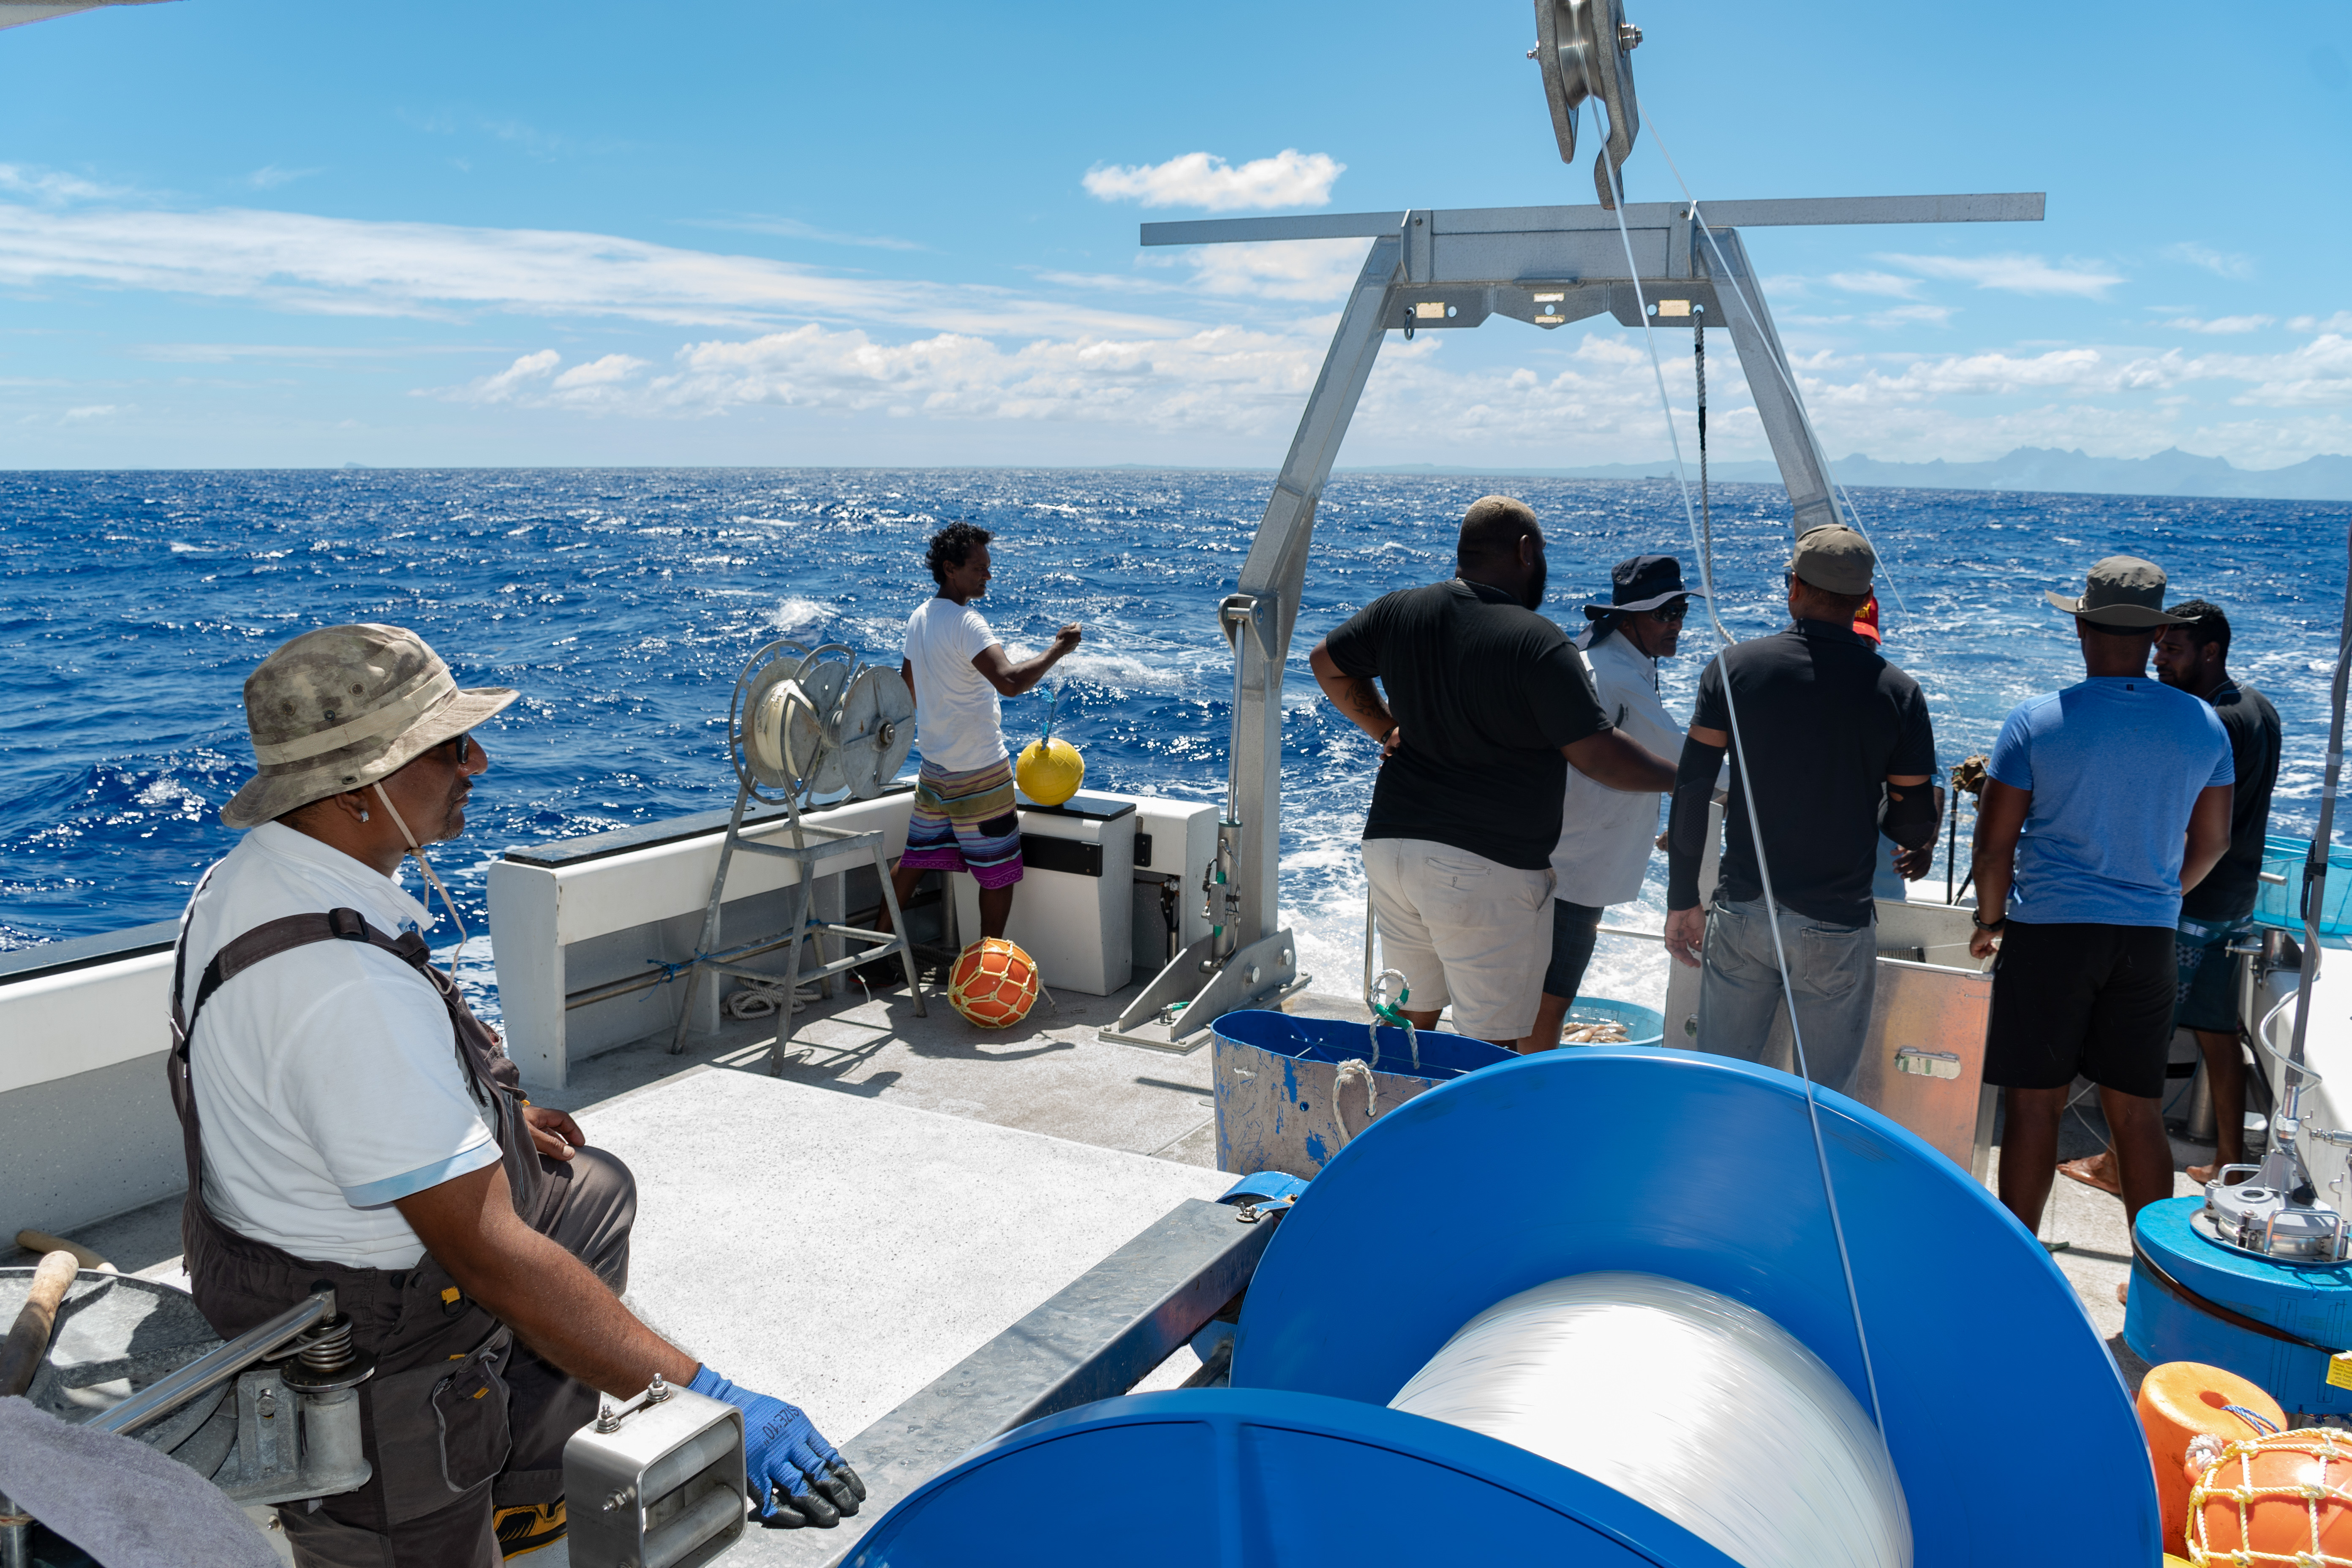 Longline fishing training for artisanal fishers in Mauritius